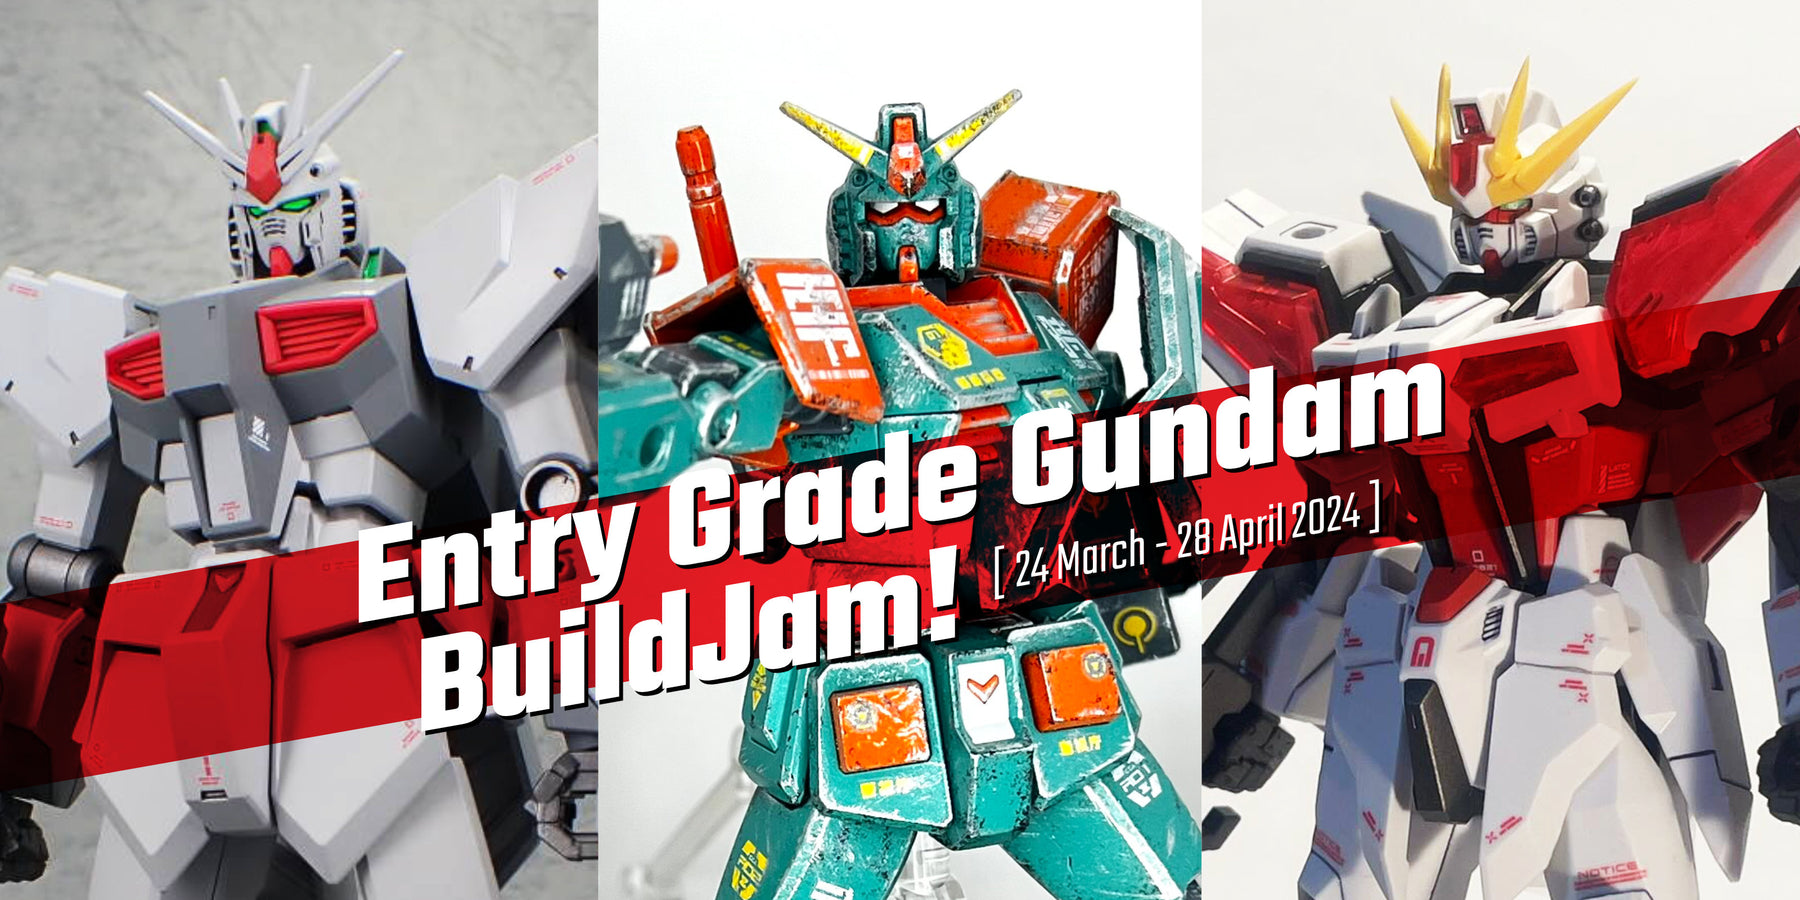 Announcing Entry Grade Gundam BuildJam Competition!